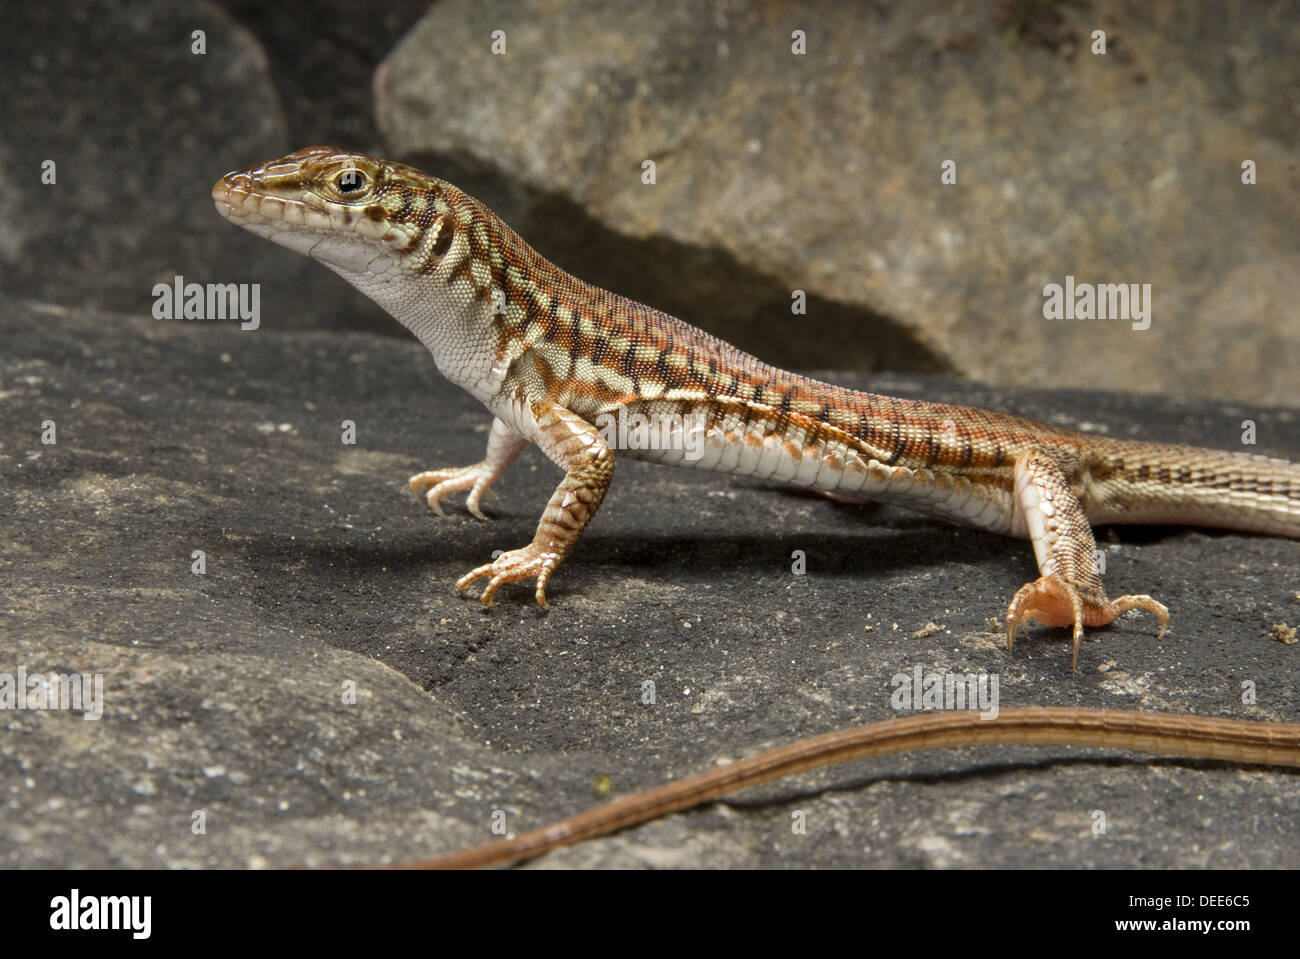 Painted Long Tailed Lizard, Latastia longicaudata Stock Photo